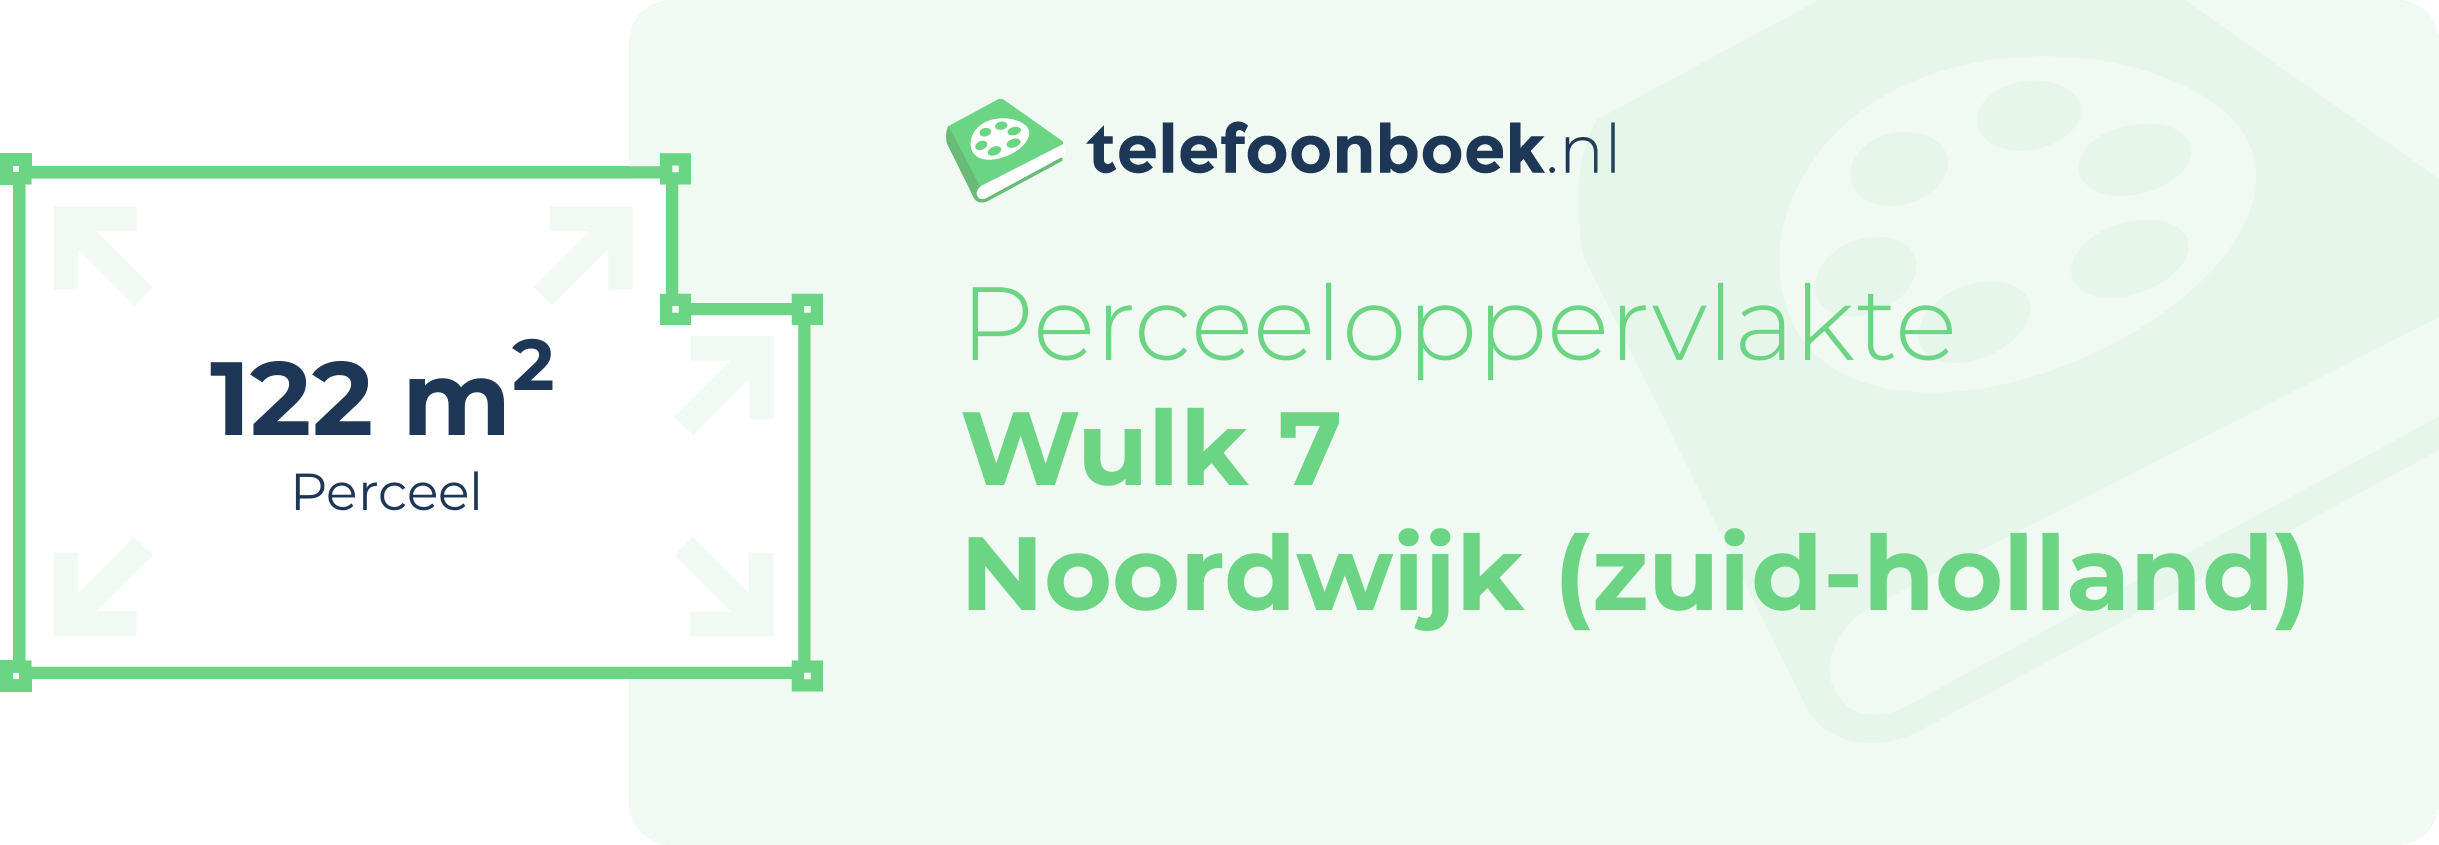 Perceeloppervlakte Wulk 7 Noordwijk (Zuid-Holland)